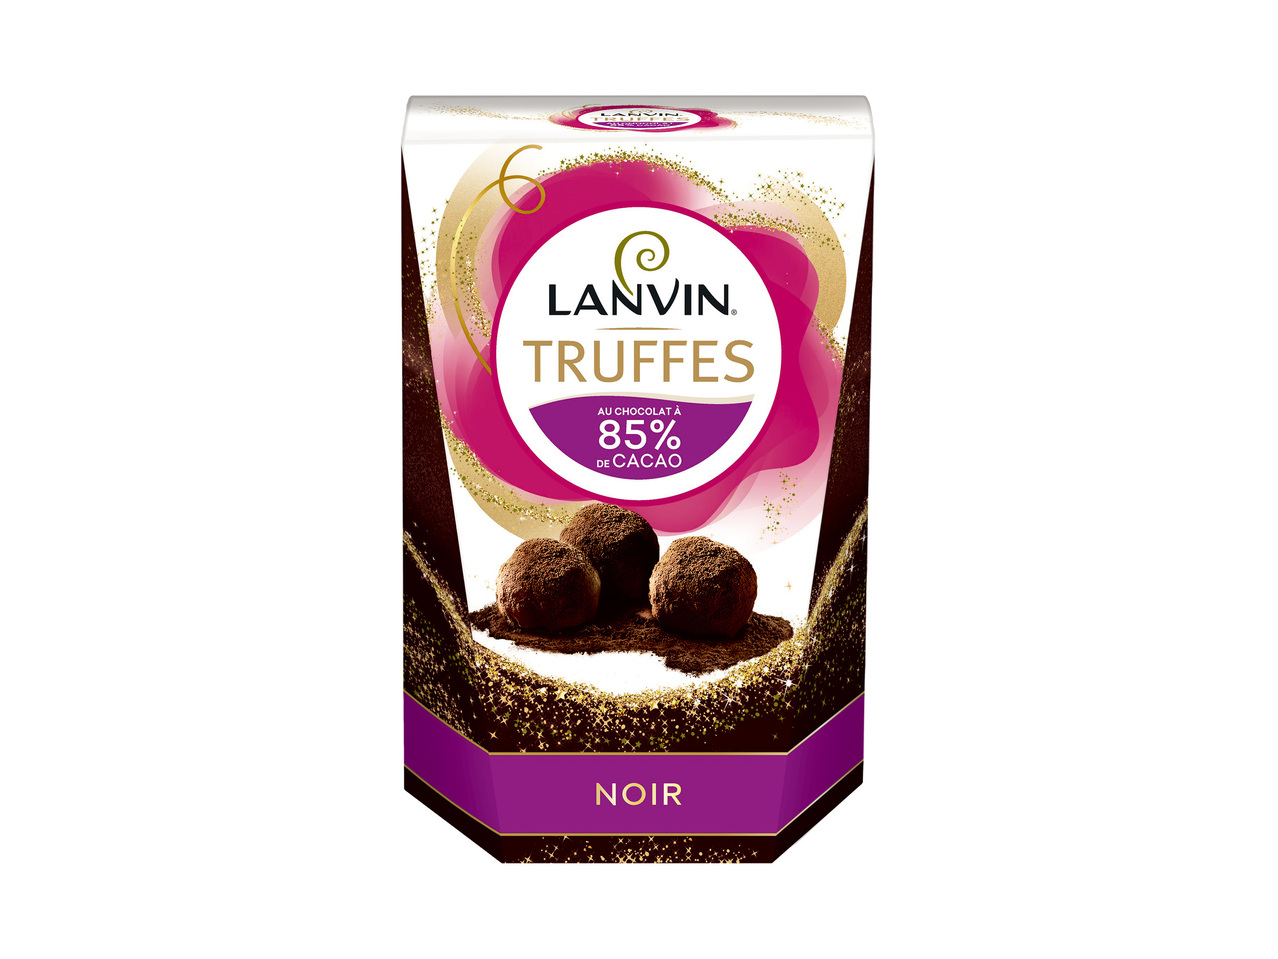 Lanvin truffes1